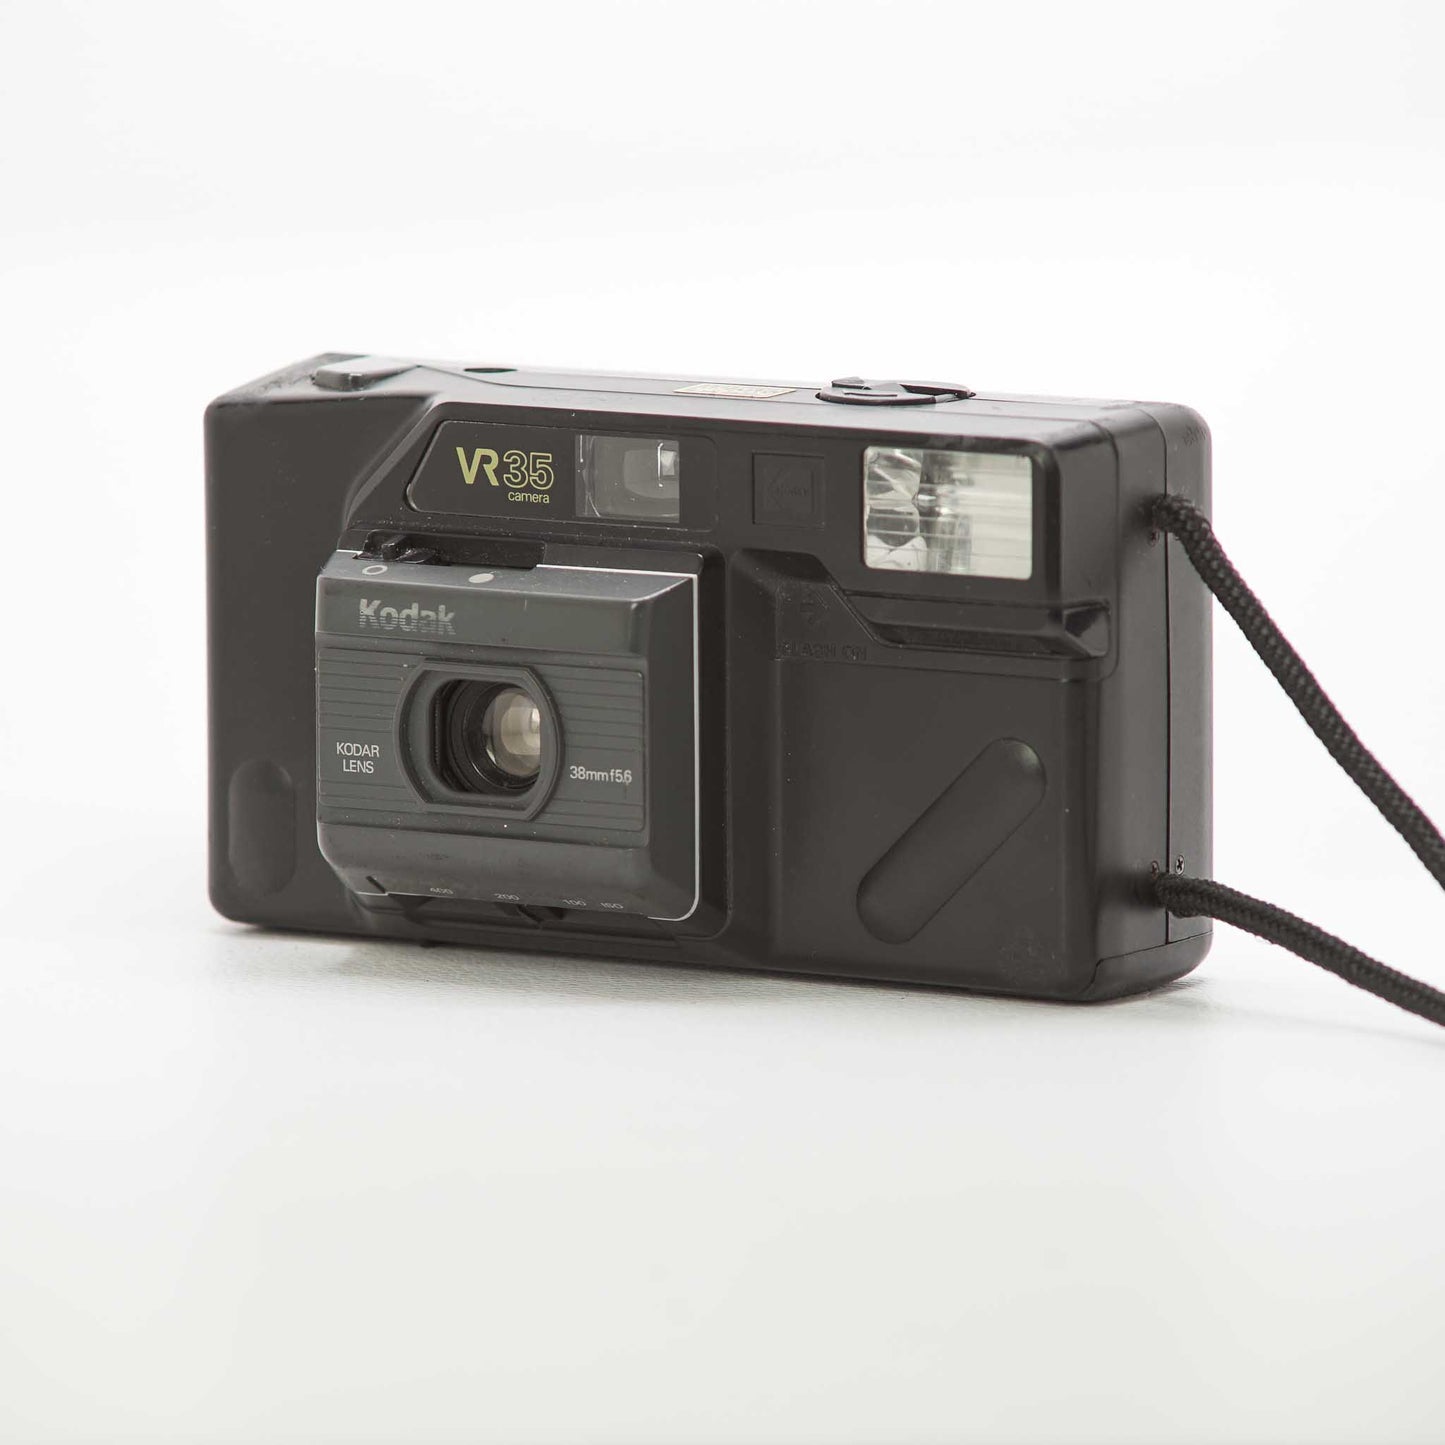 Kodak VR35 K4a